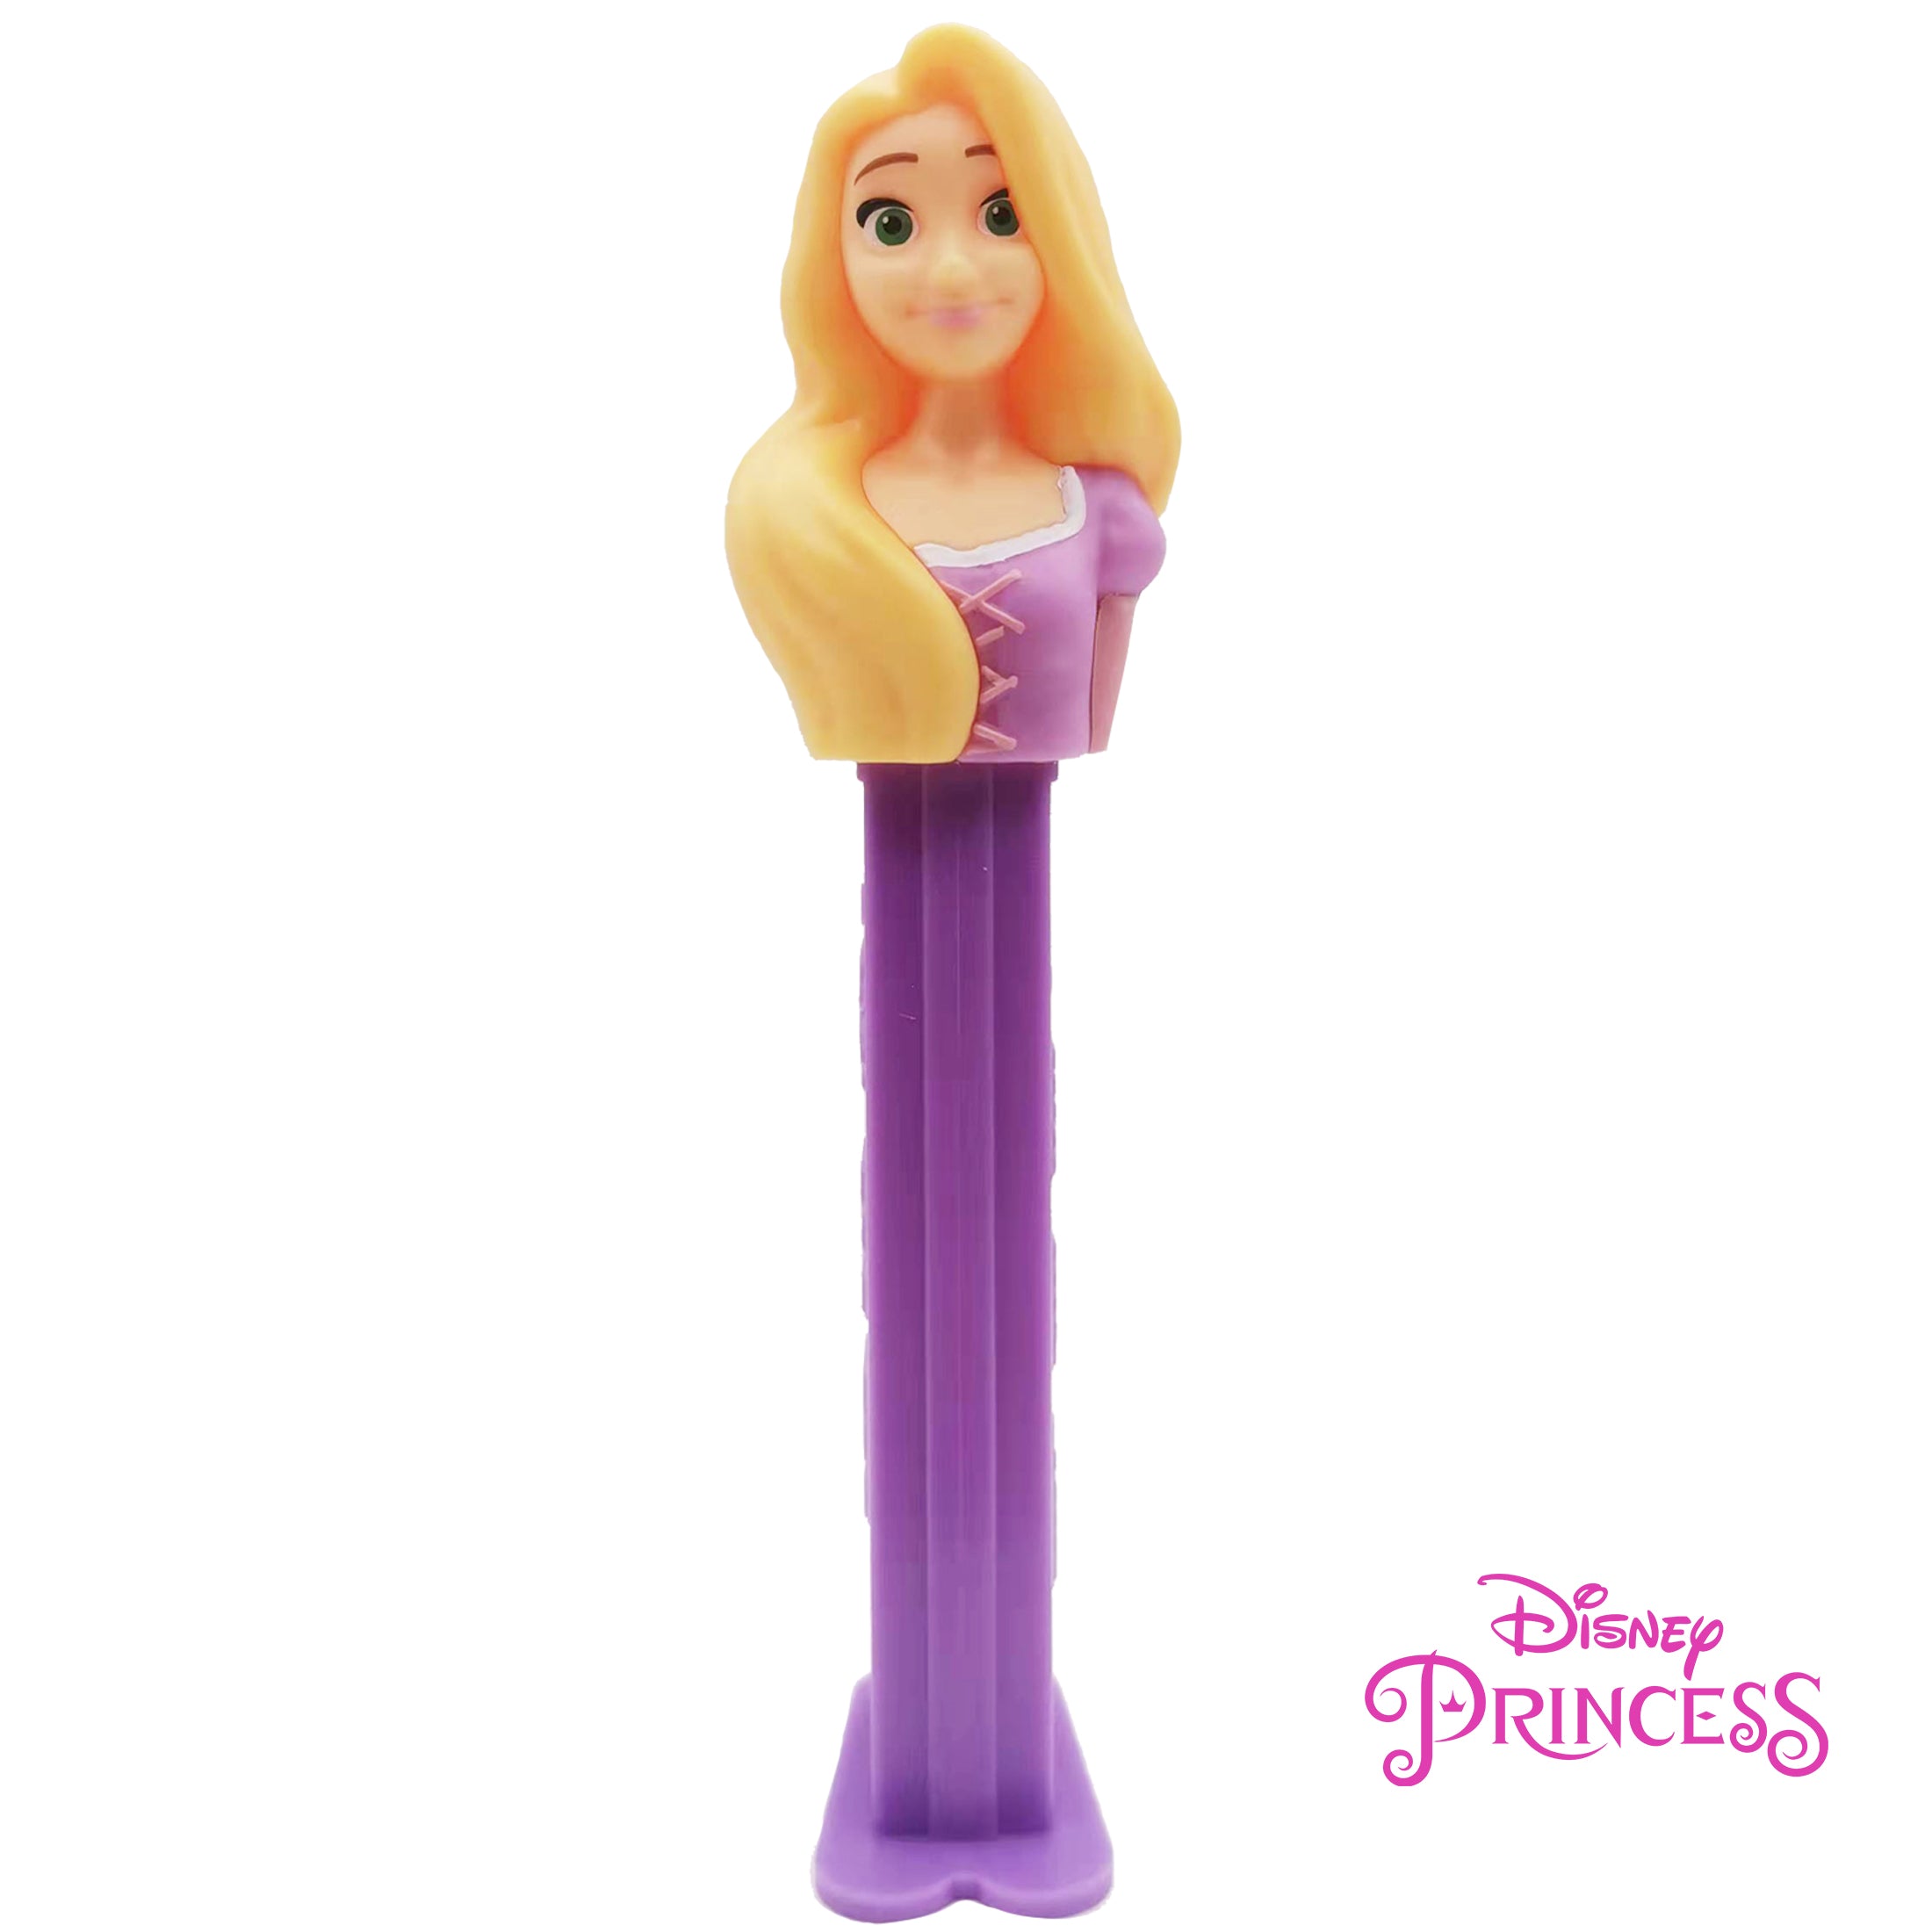 princess disney rapunzel